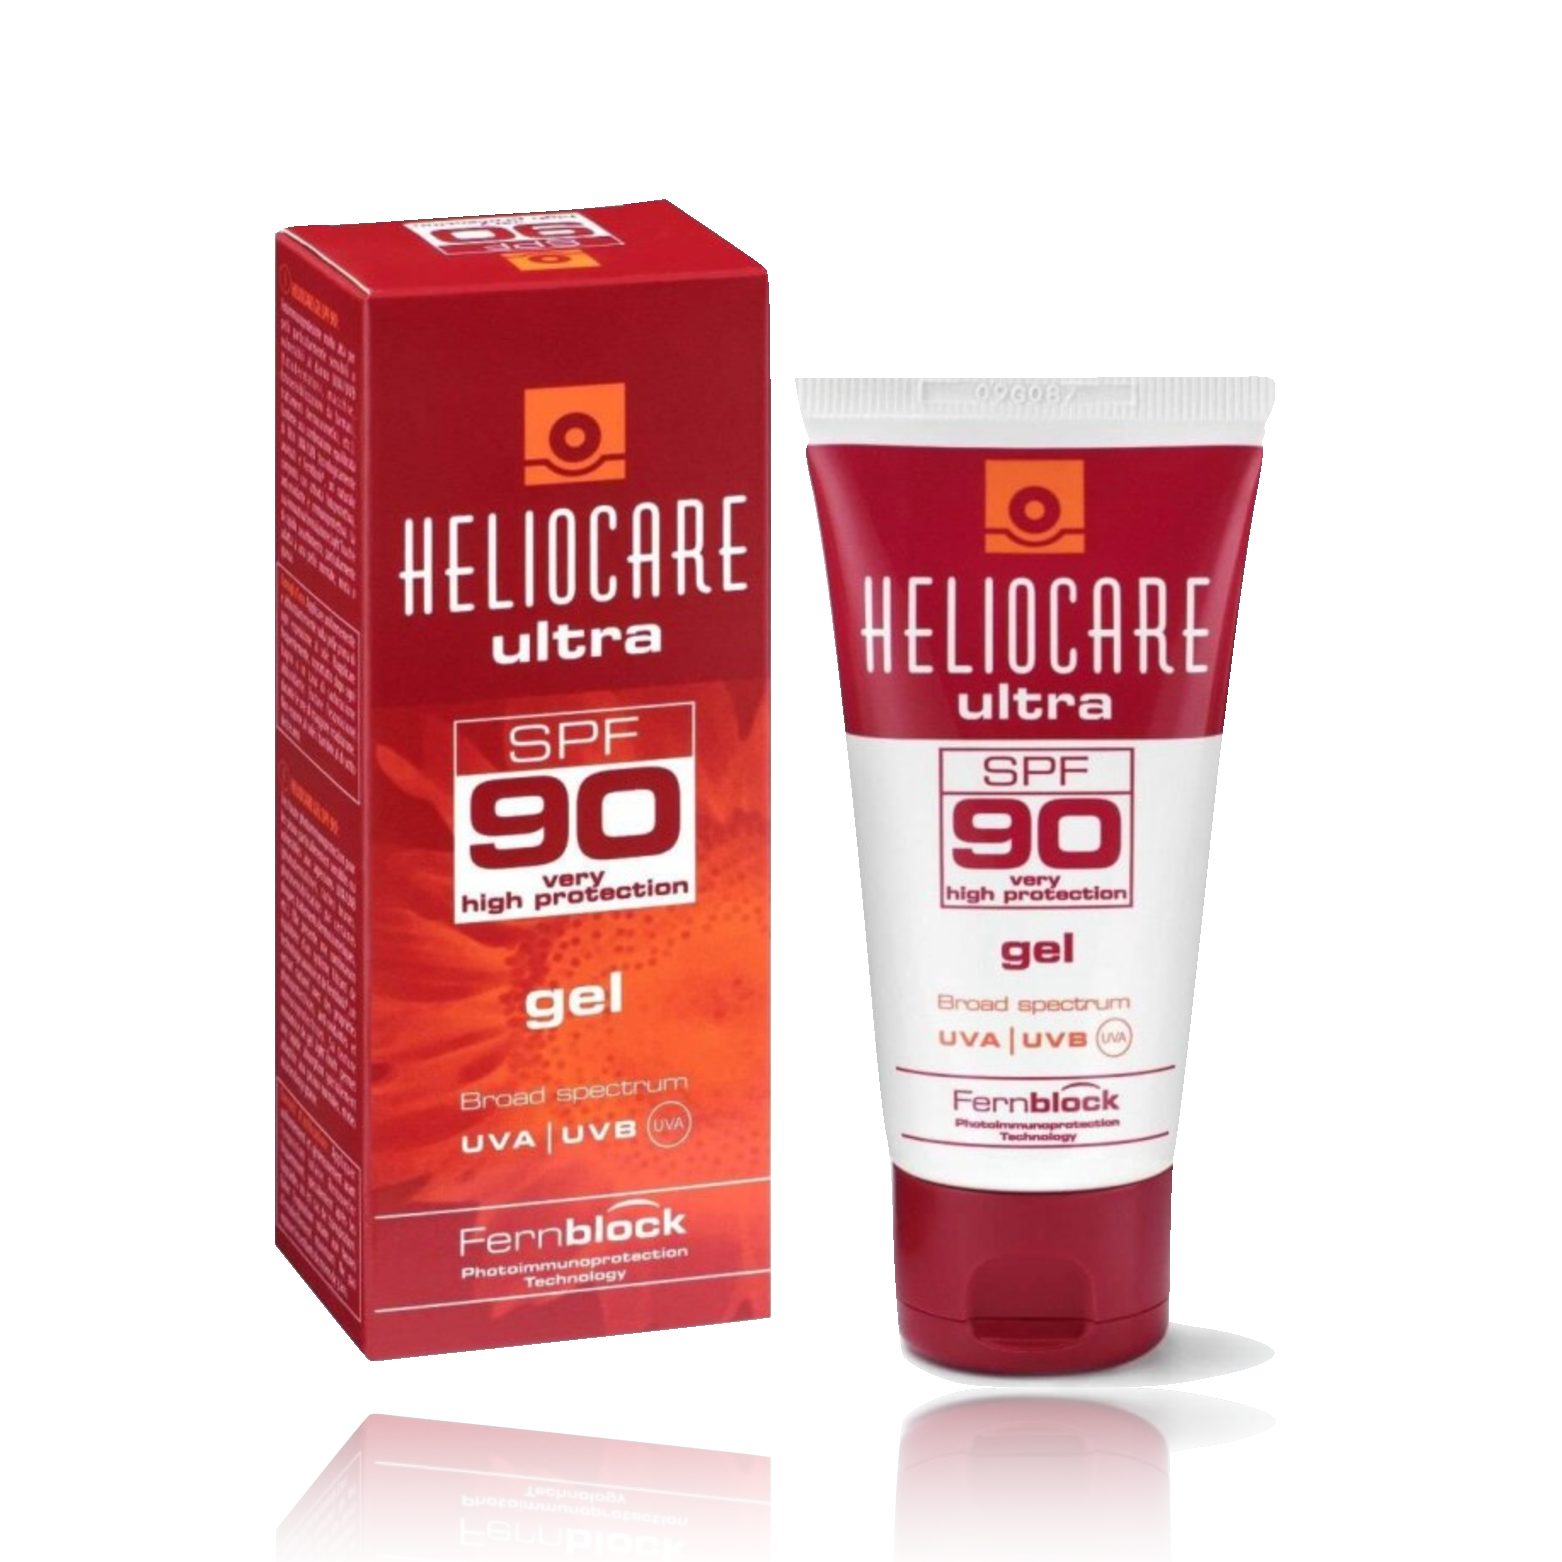 Heliocare spf 50 gel. СПФ Heliocare 2 пальца. Heliocare процедура. Heliocare Ultra Gel SPF 90 купить. Картинки с аббревиатурой солнцезащитных средств heliokare.